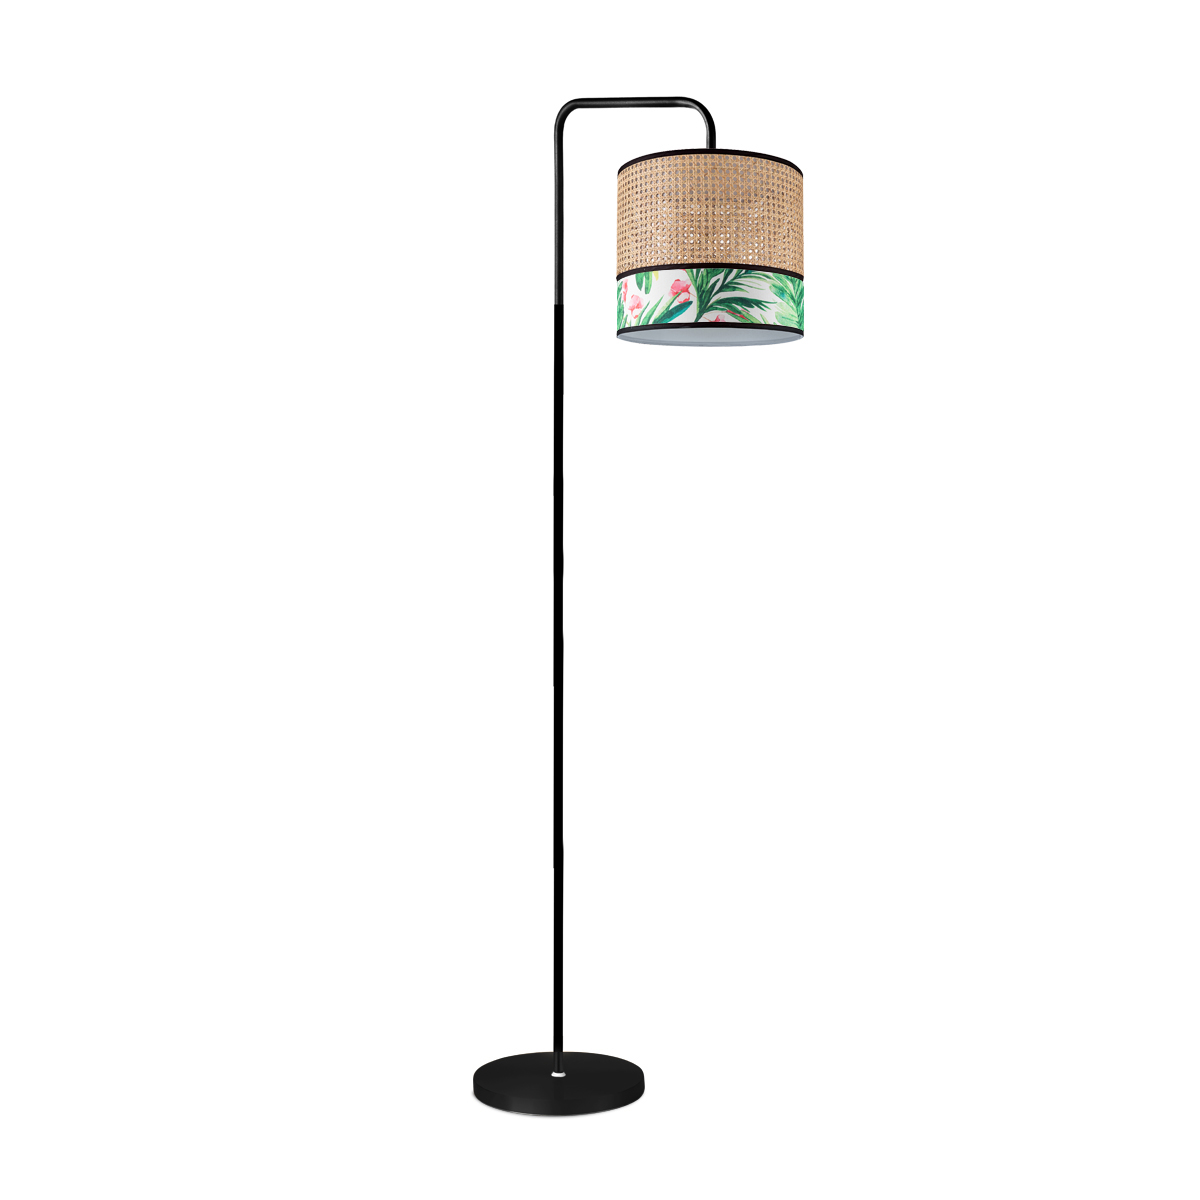 Tangla lighting - TLF7011-30B - LED Floor lamp 1 Light - metal + rattan + TC fabric - spring - sieben grass - E27